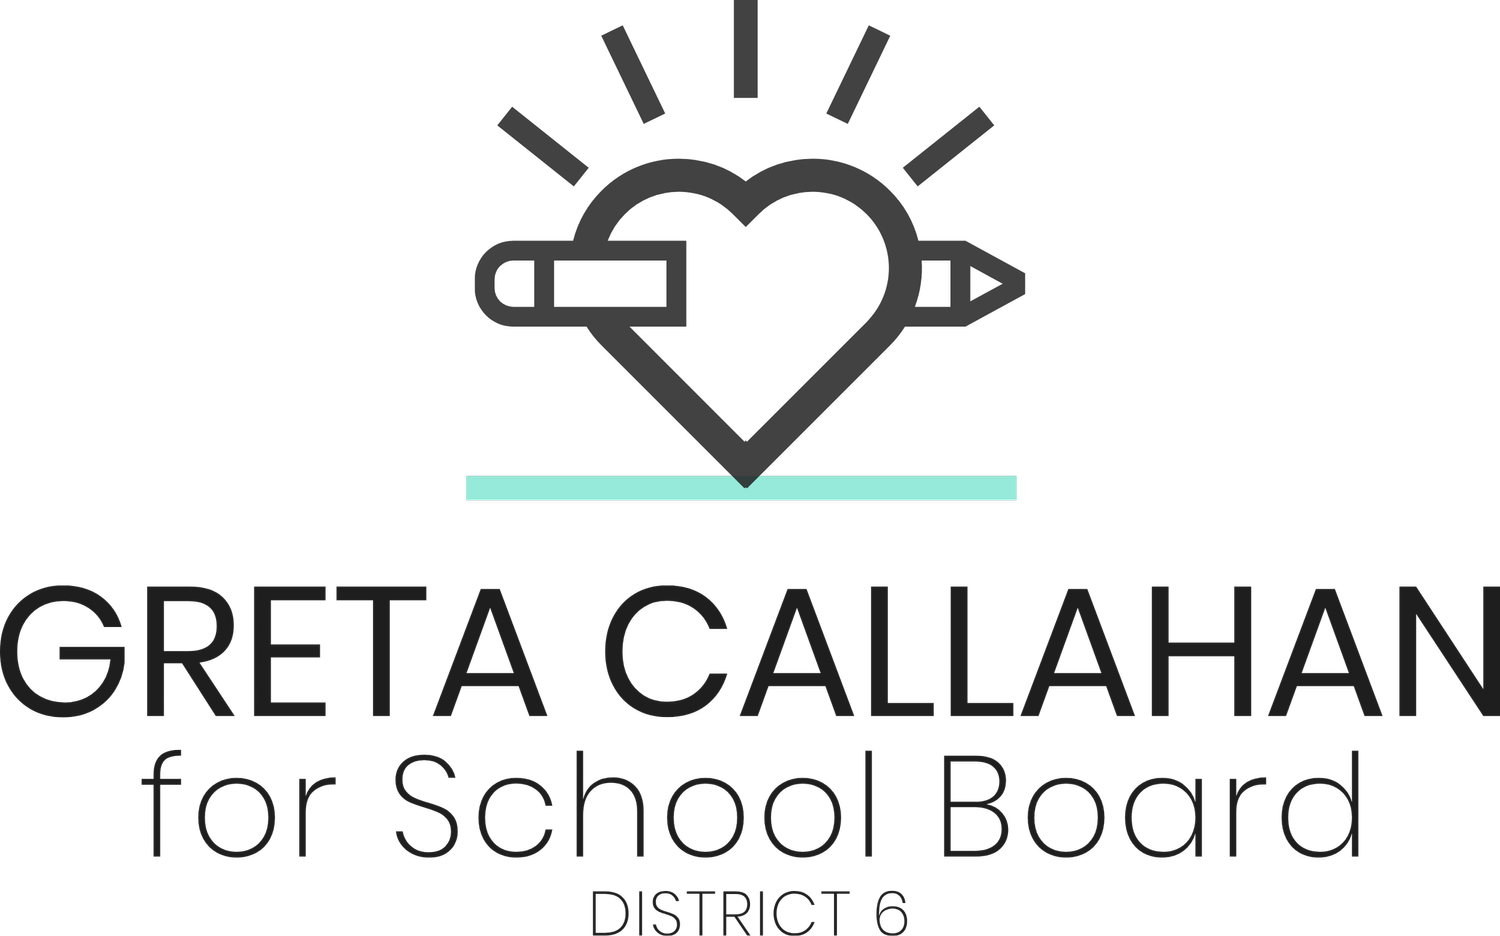 Greta Callahan for School Board - District 6